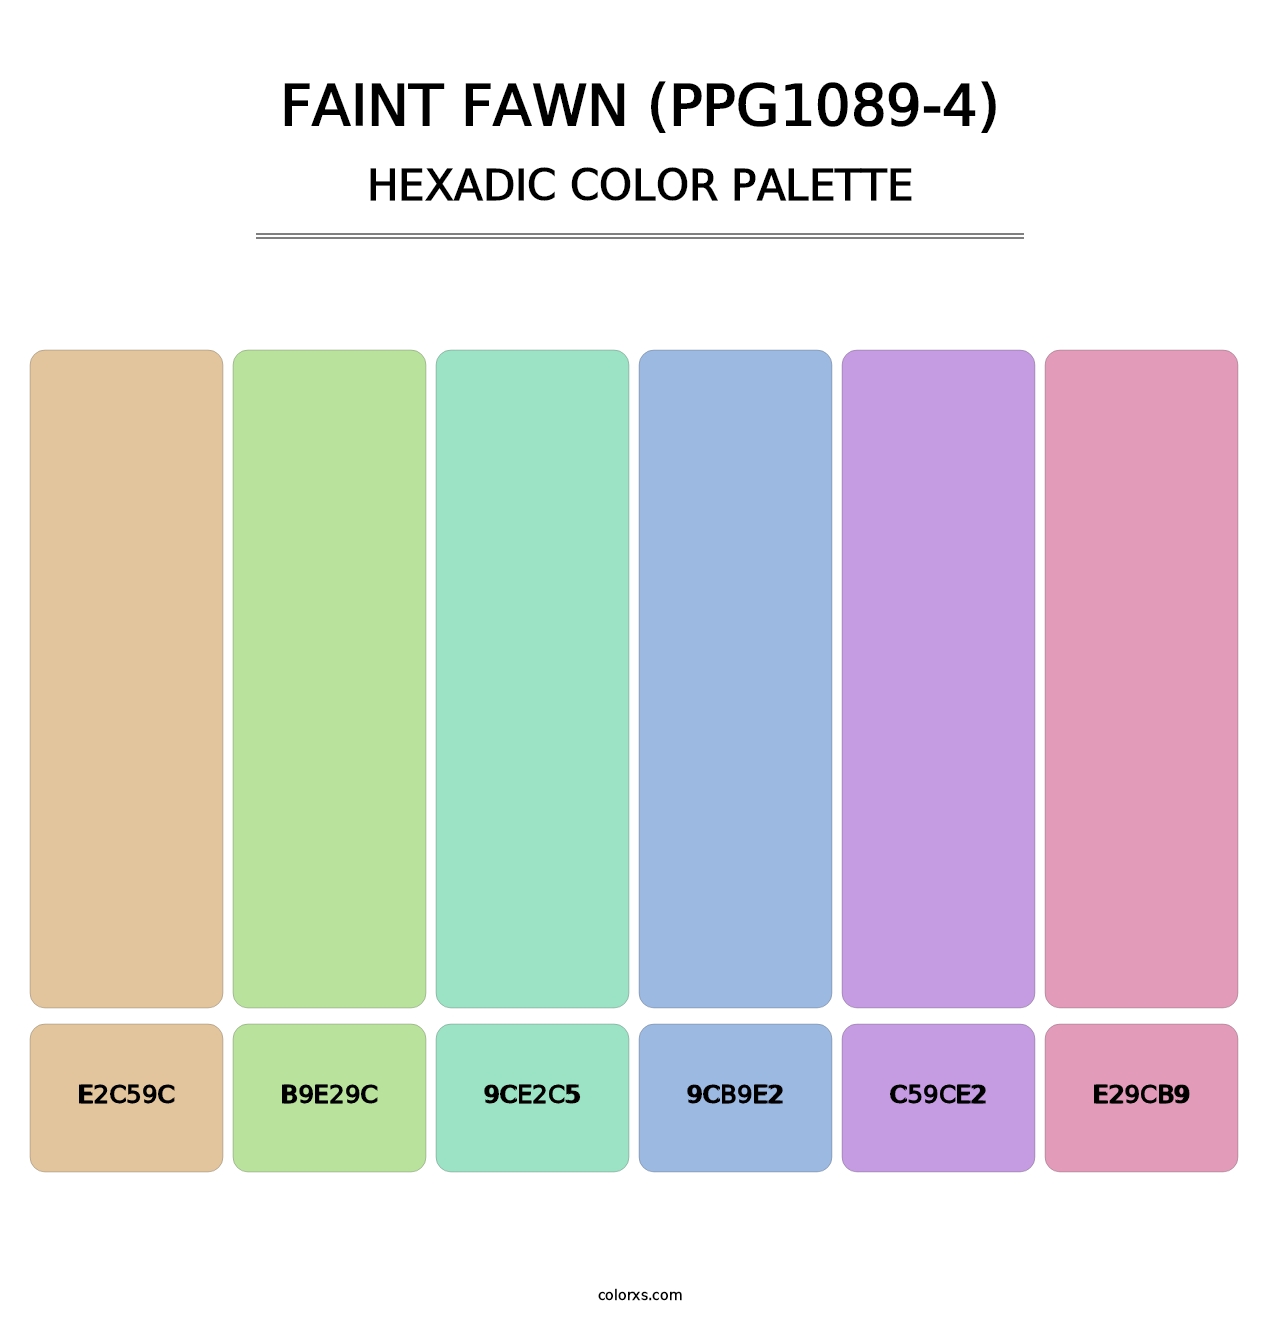 Faint Fawn (PPG1089-4) - Hexadic Color Palette